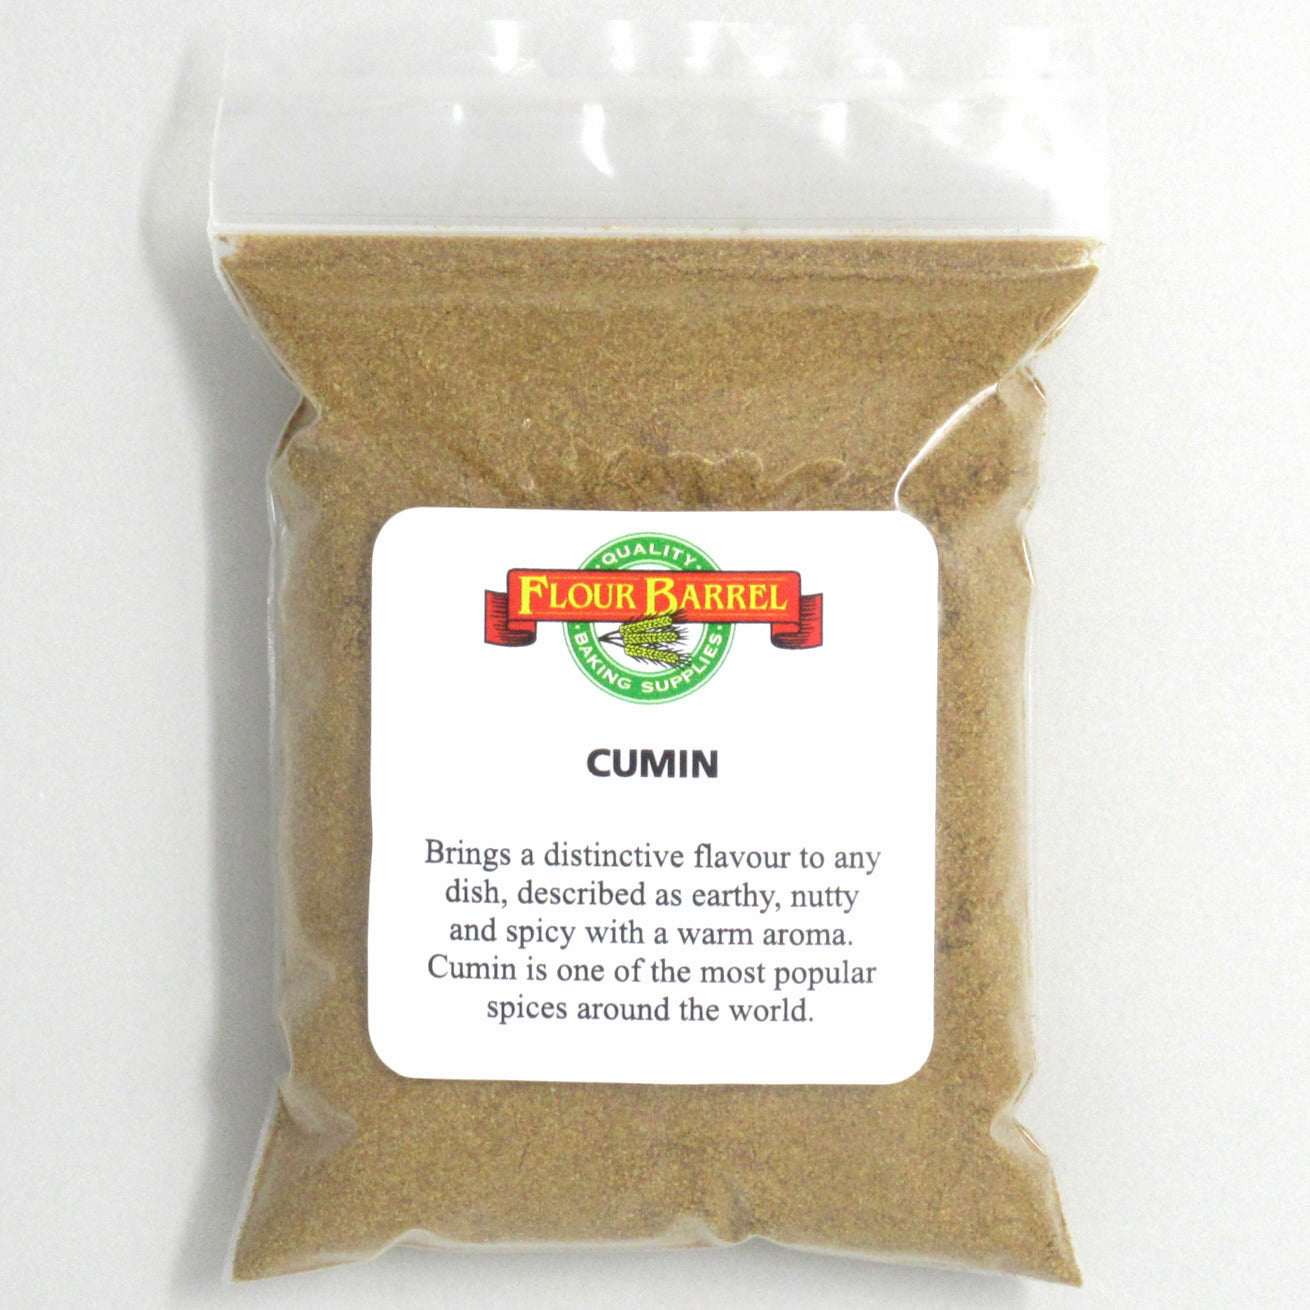 Flour Barrel product image - Cumin